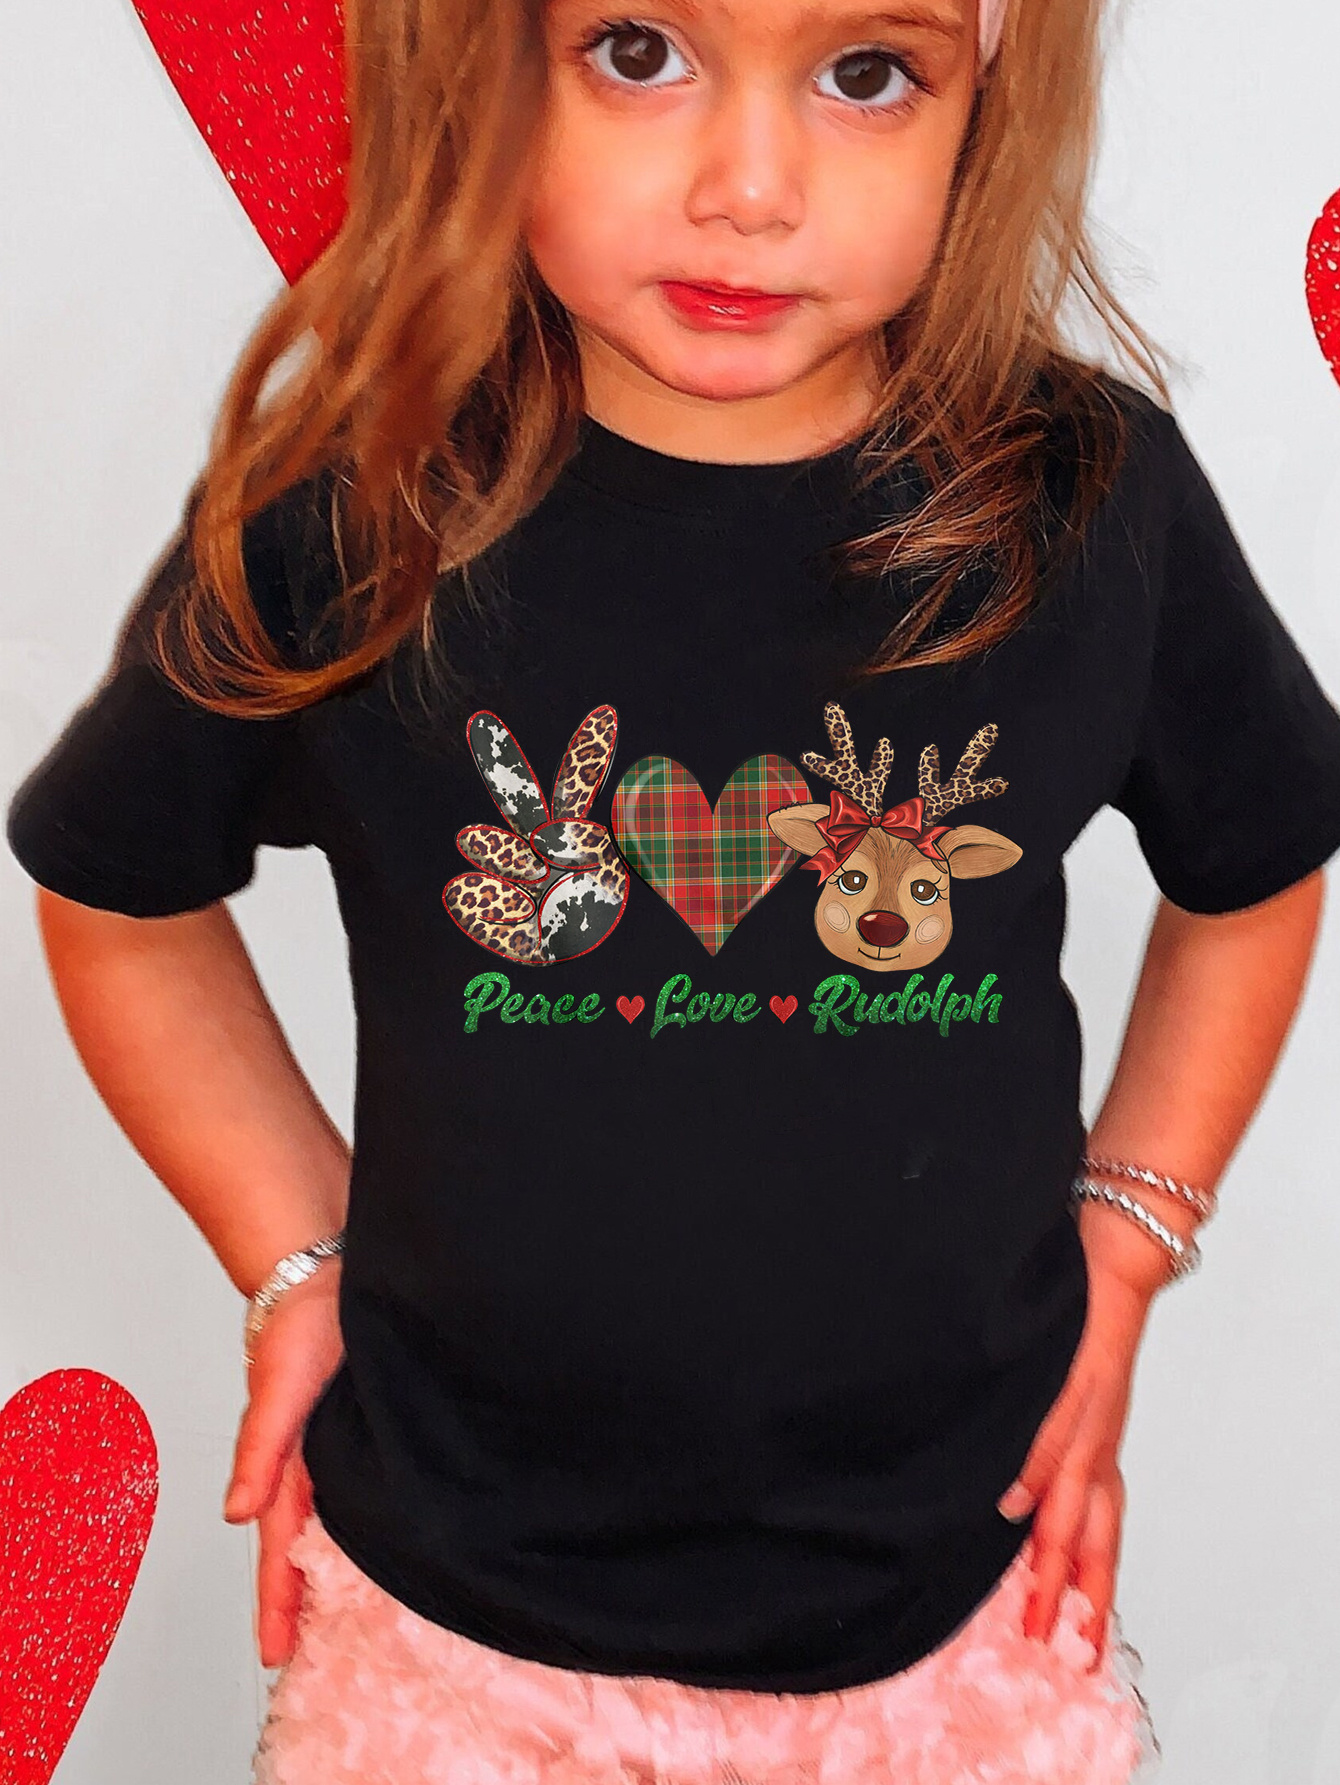 Camiseta de Navidad Manga Larga para Niña y Niño Reno Rudolph